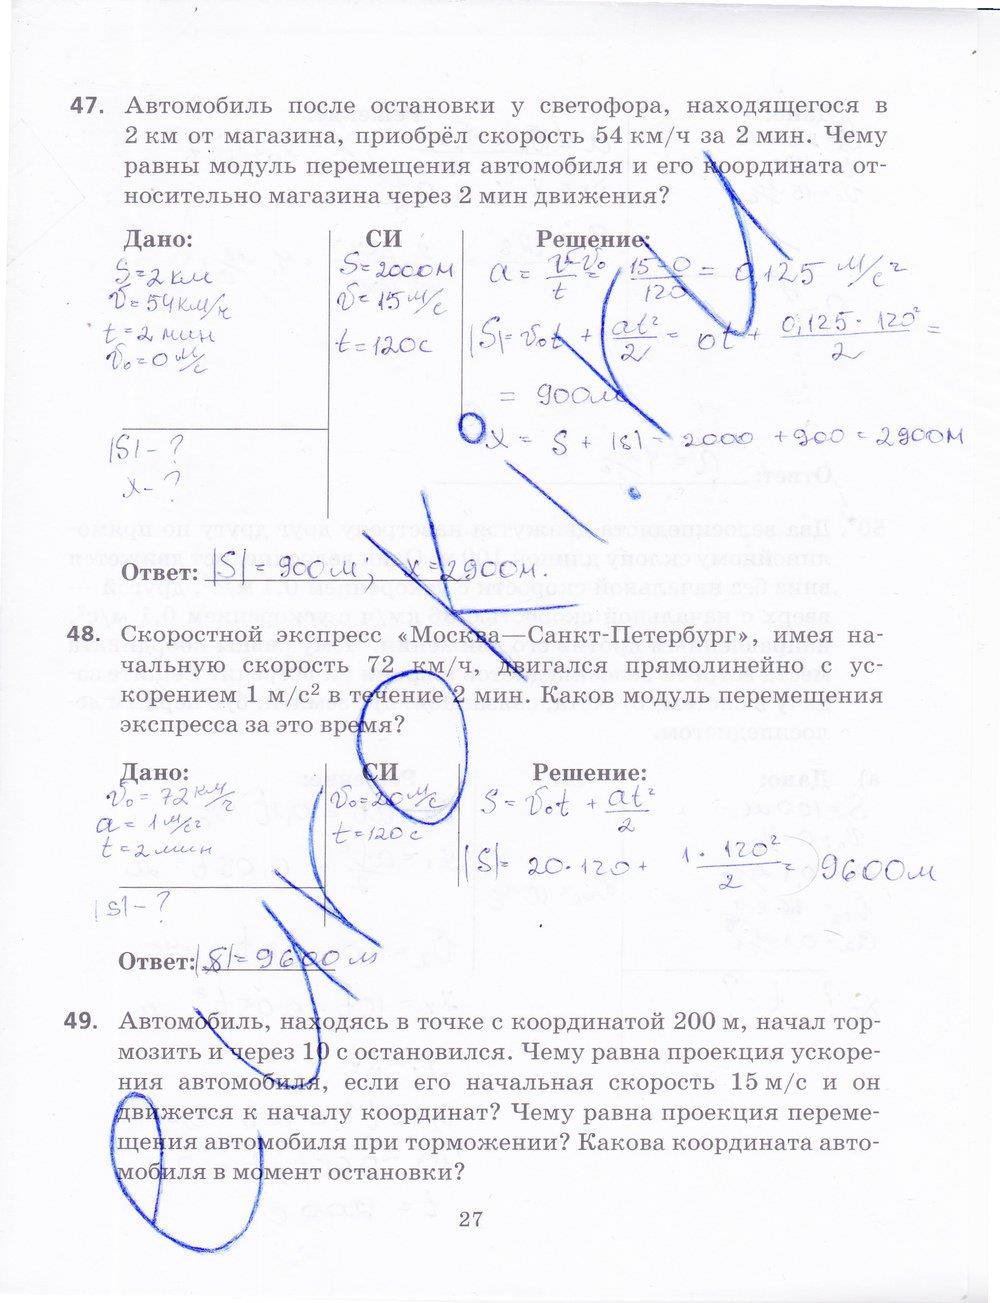 гдз 9 класс рабочая тетрадь страница 27 физика Пурышева, Важеевская, Чаругин